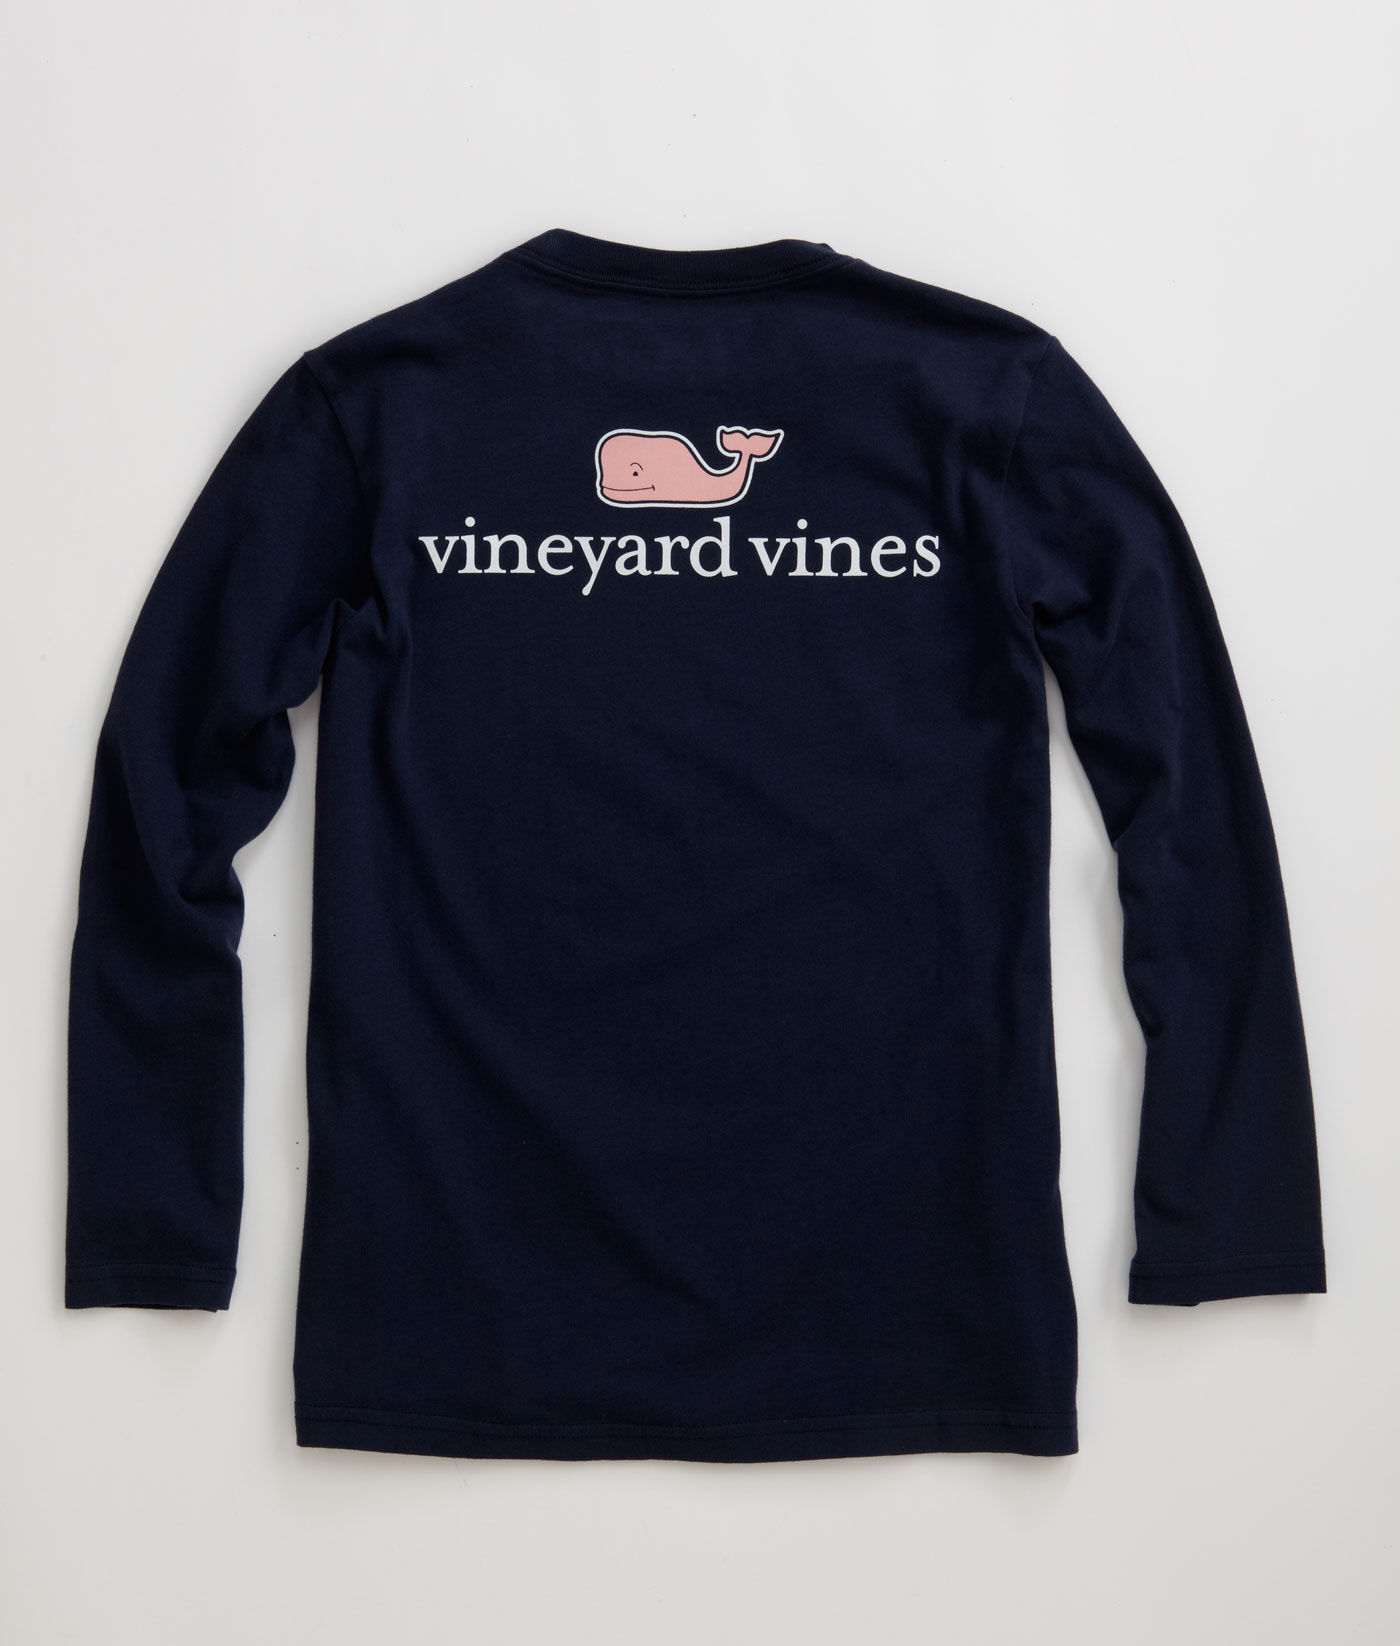 Vineyard Vines Boys Size Chart